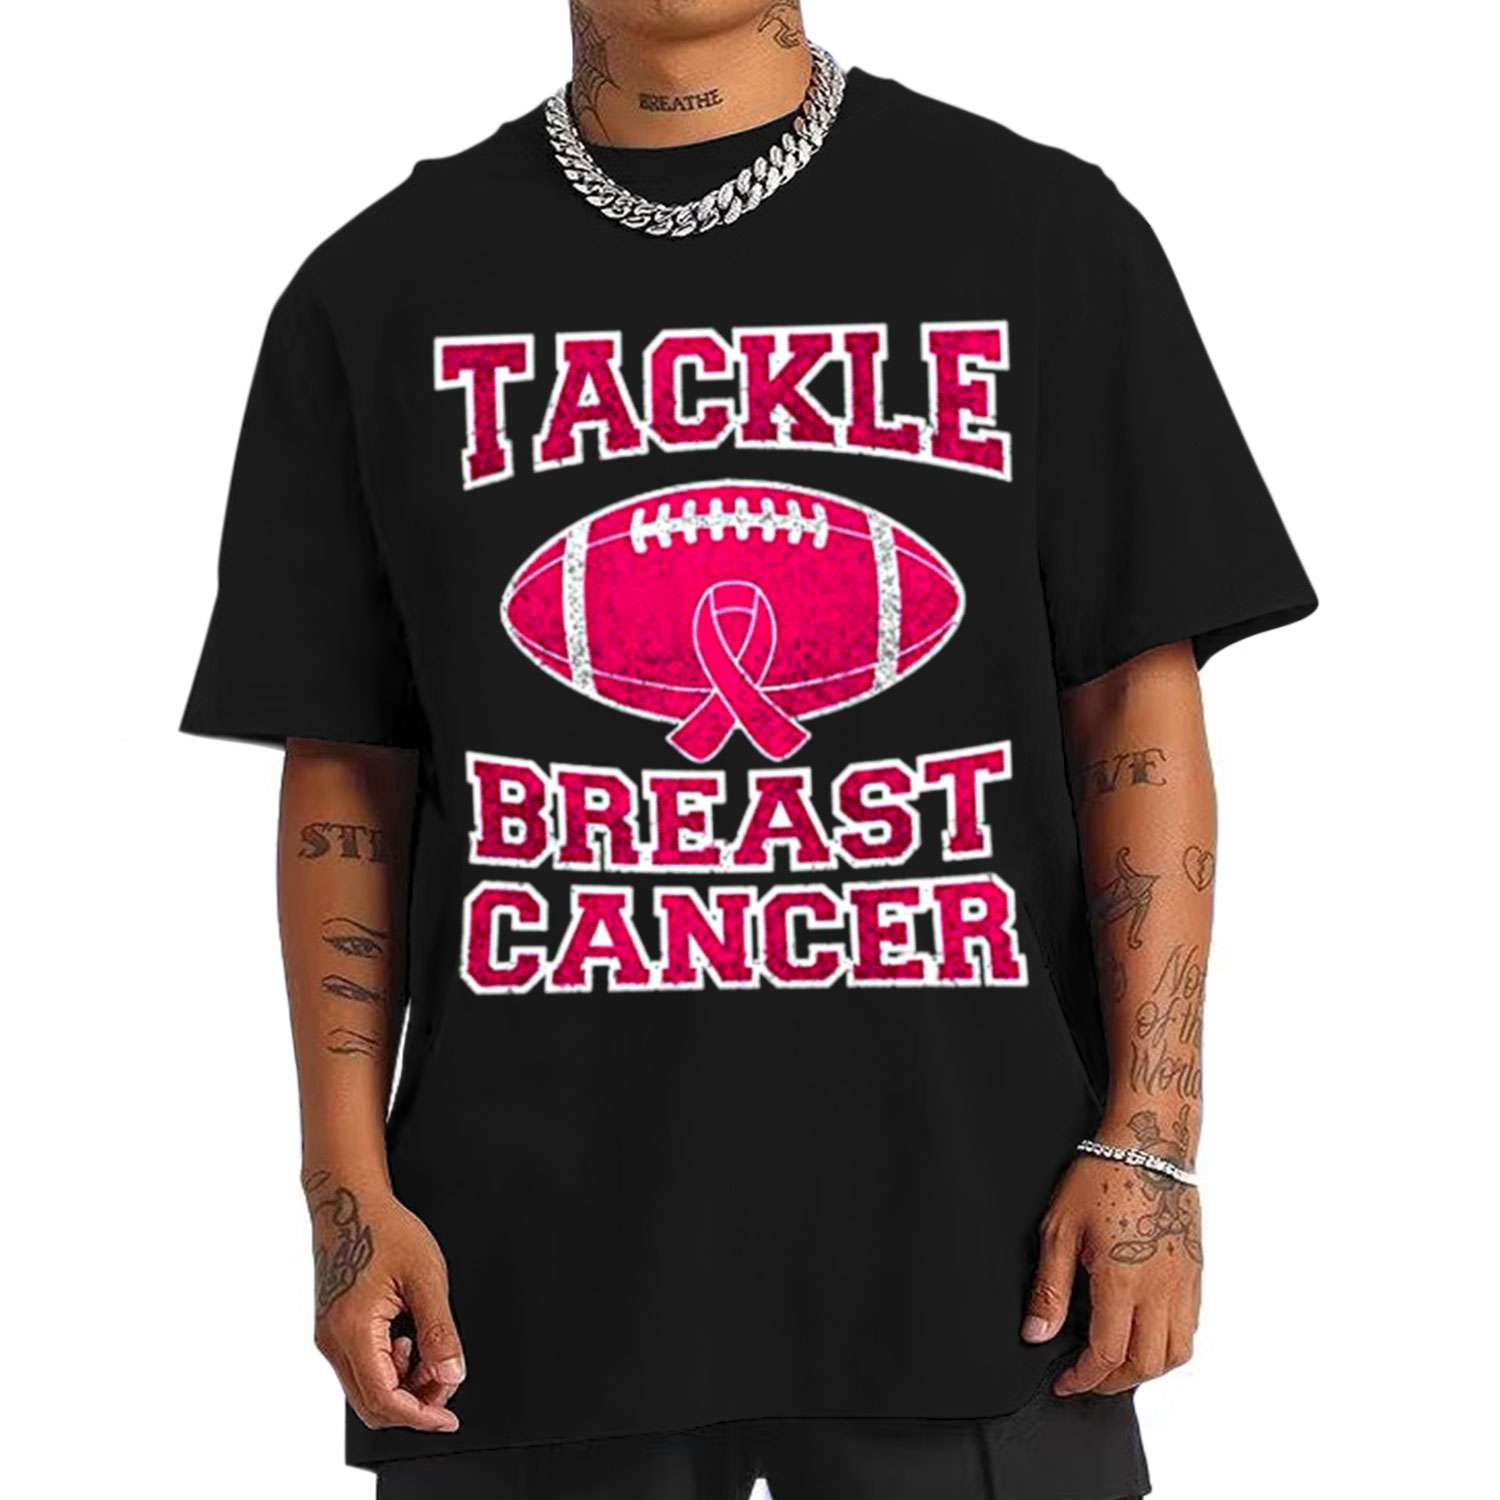 Tackle Breast Cancer Awareness T-shirt